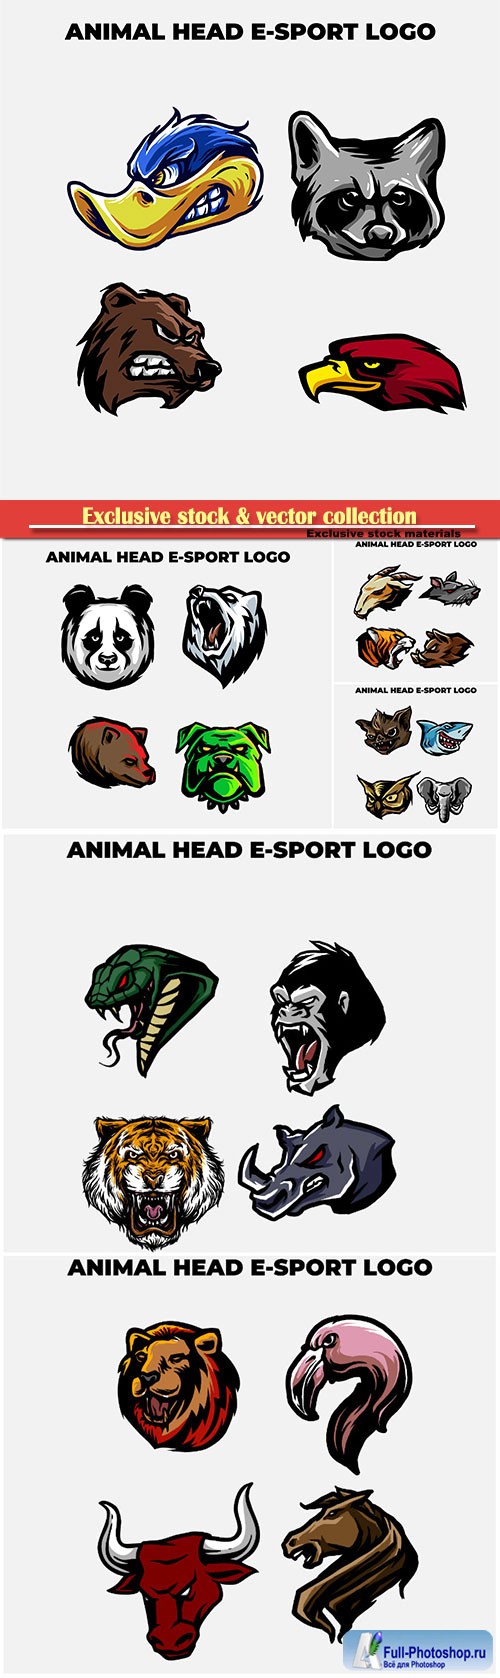 Animal head mascot logo vector